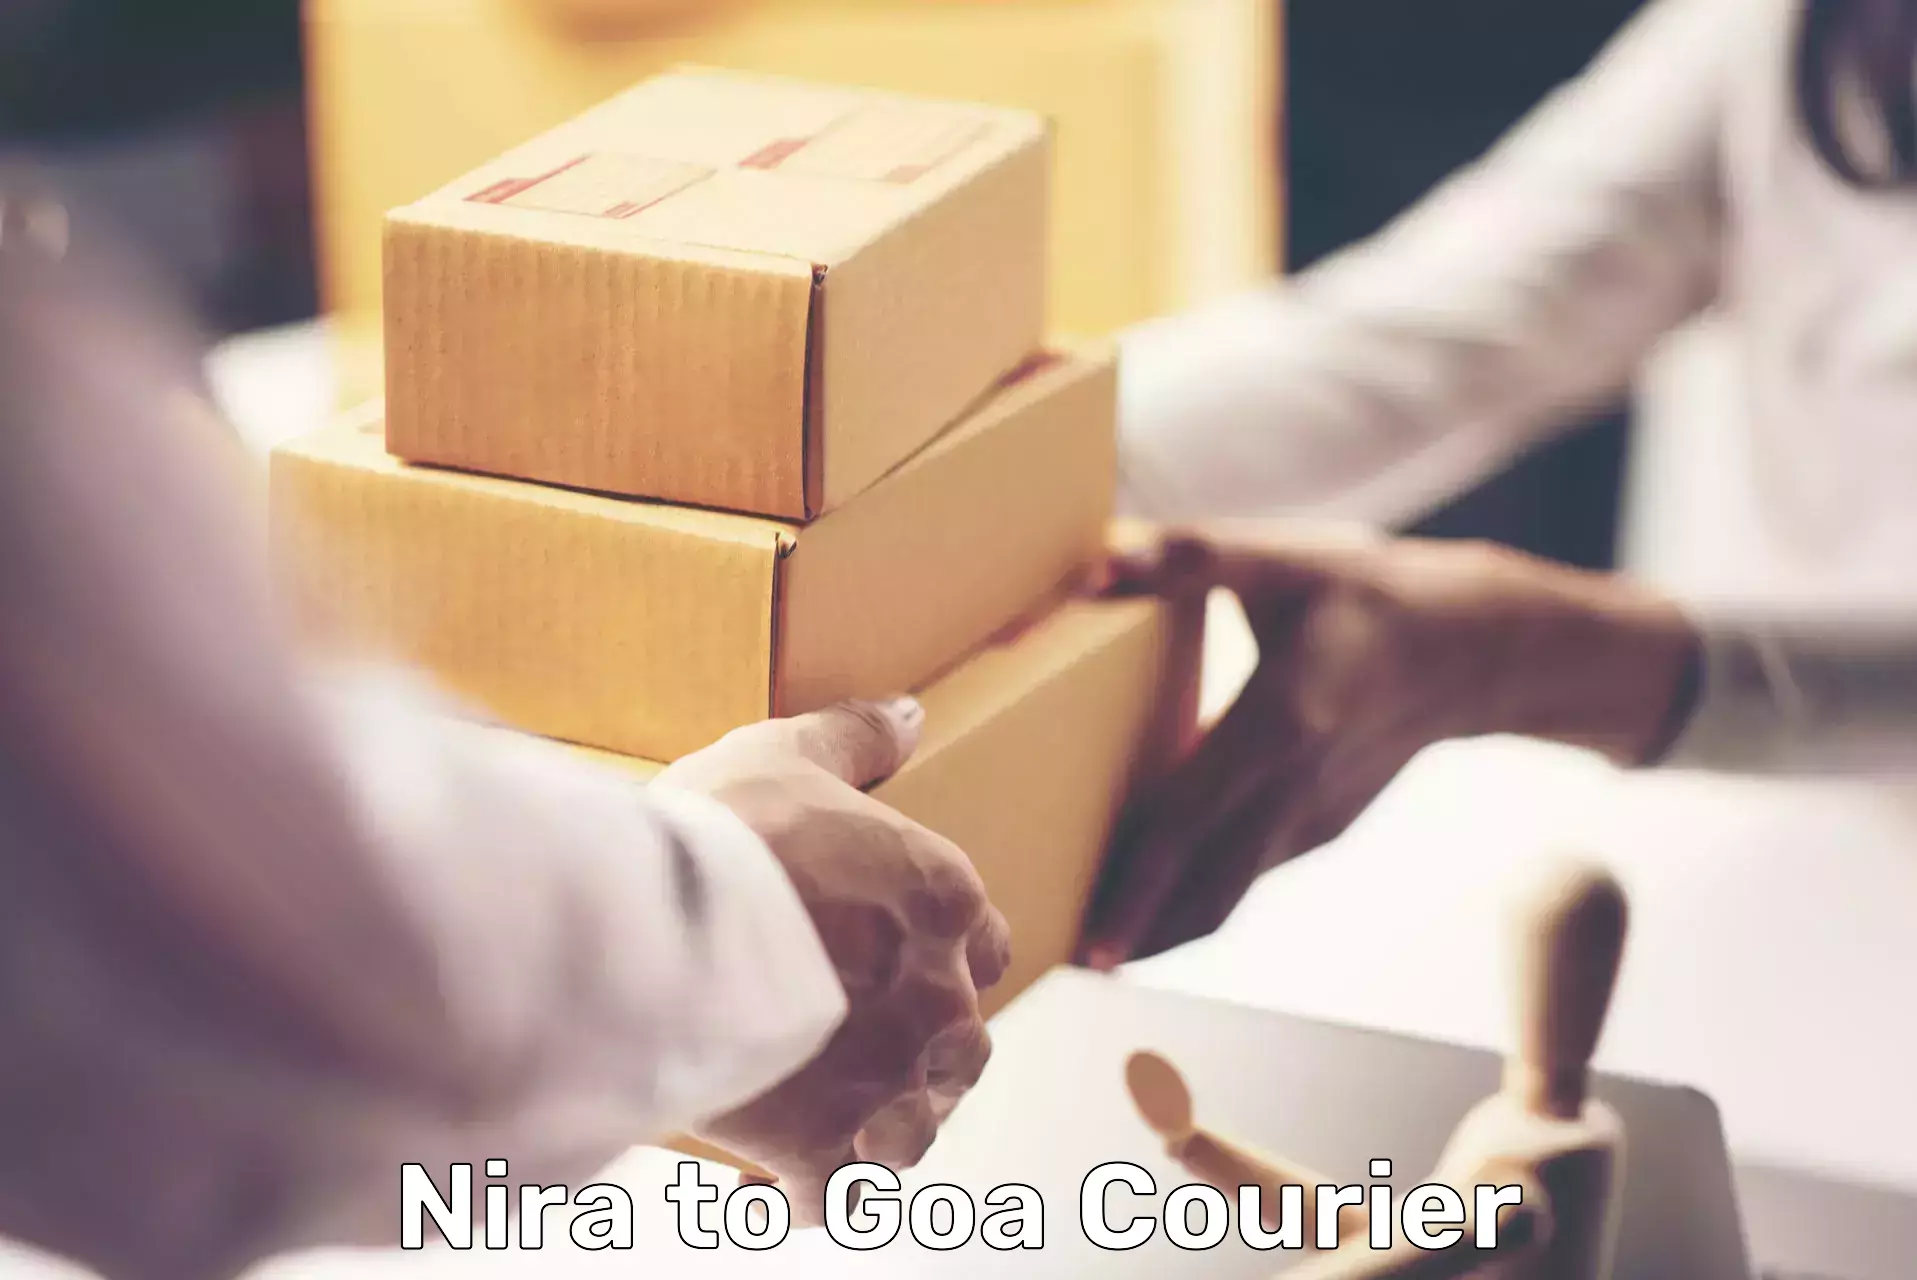 Global courier networks Nira to Goa